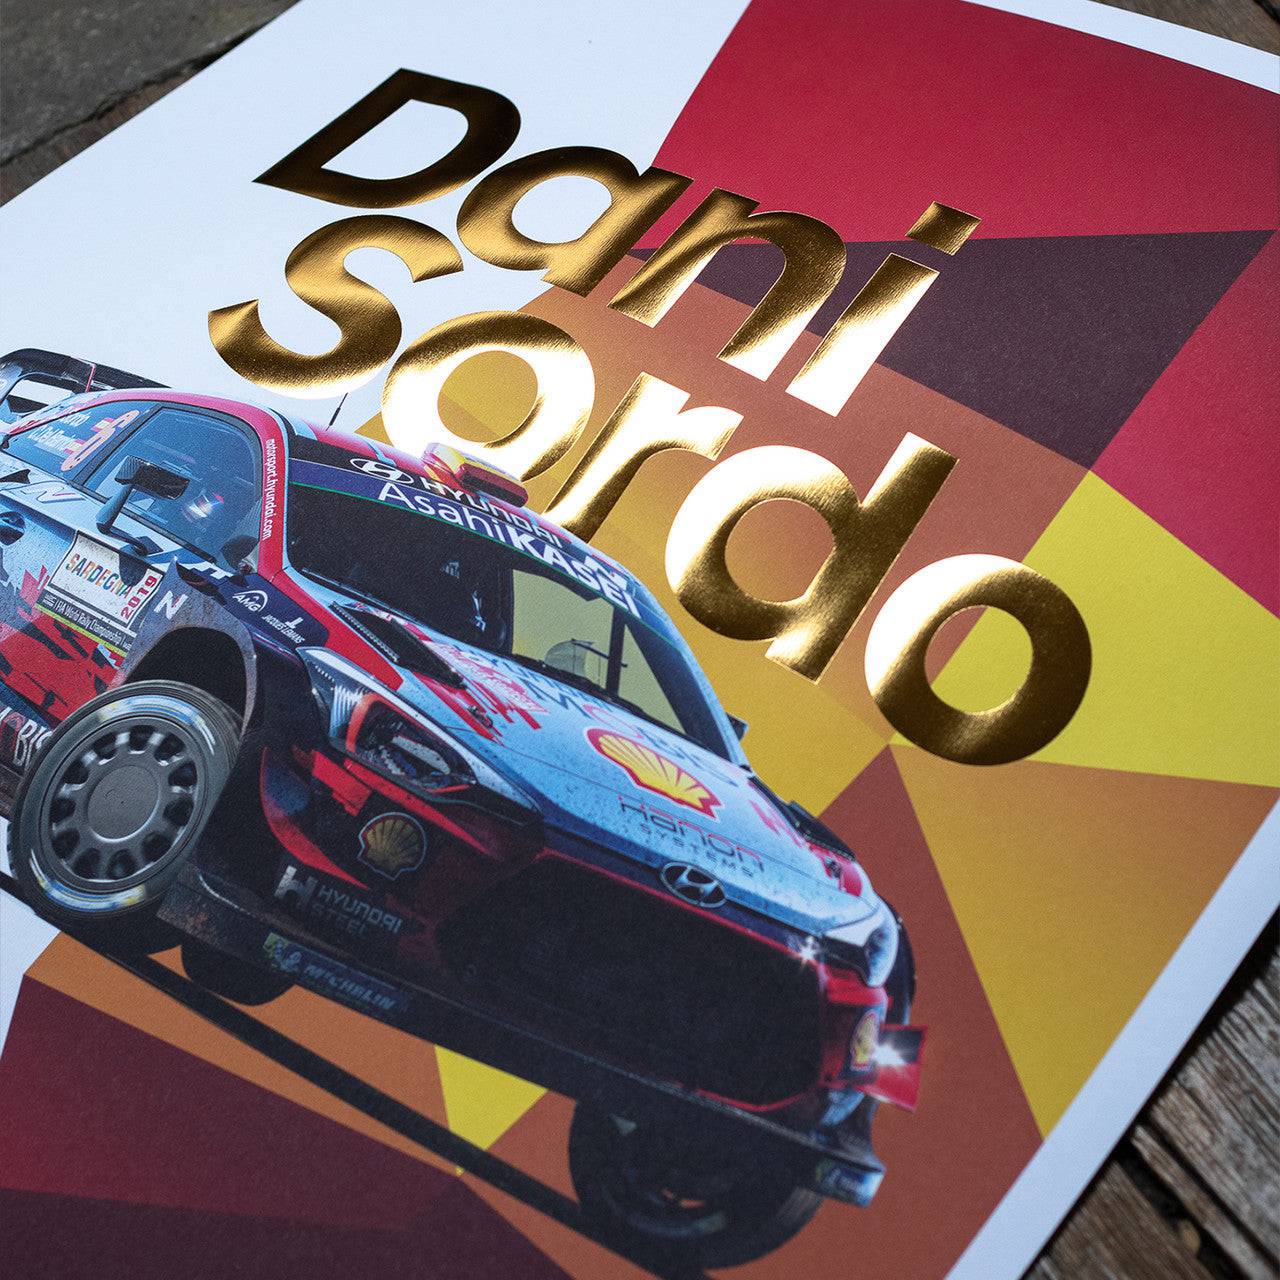 Dani Sordo - Hyundai Motorsport - Rally Italia Sardegna 2019 | Signed Collector's Edition